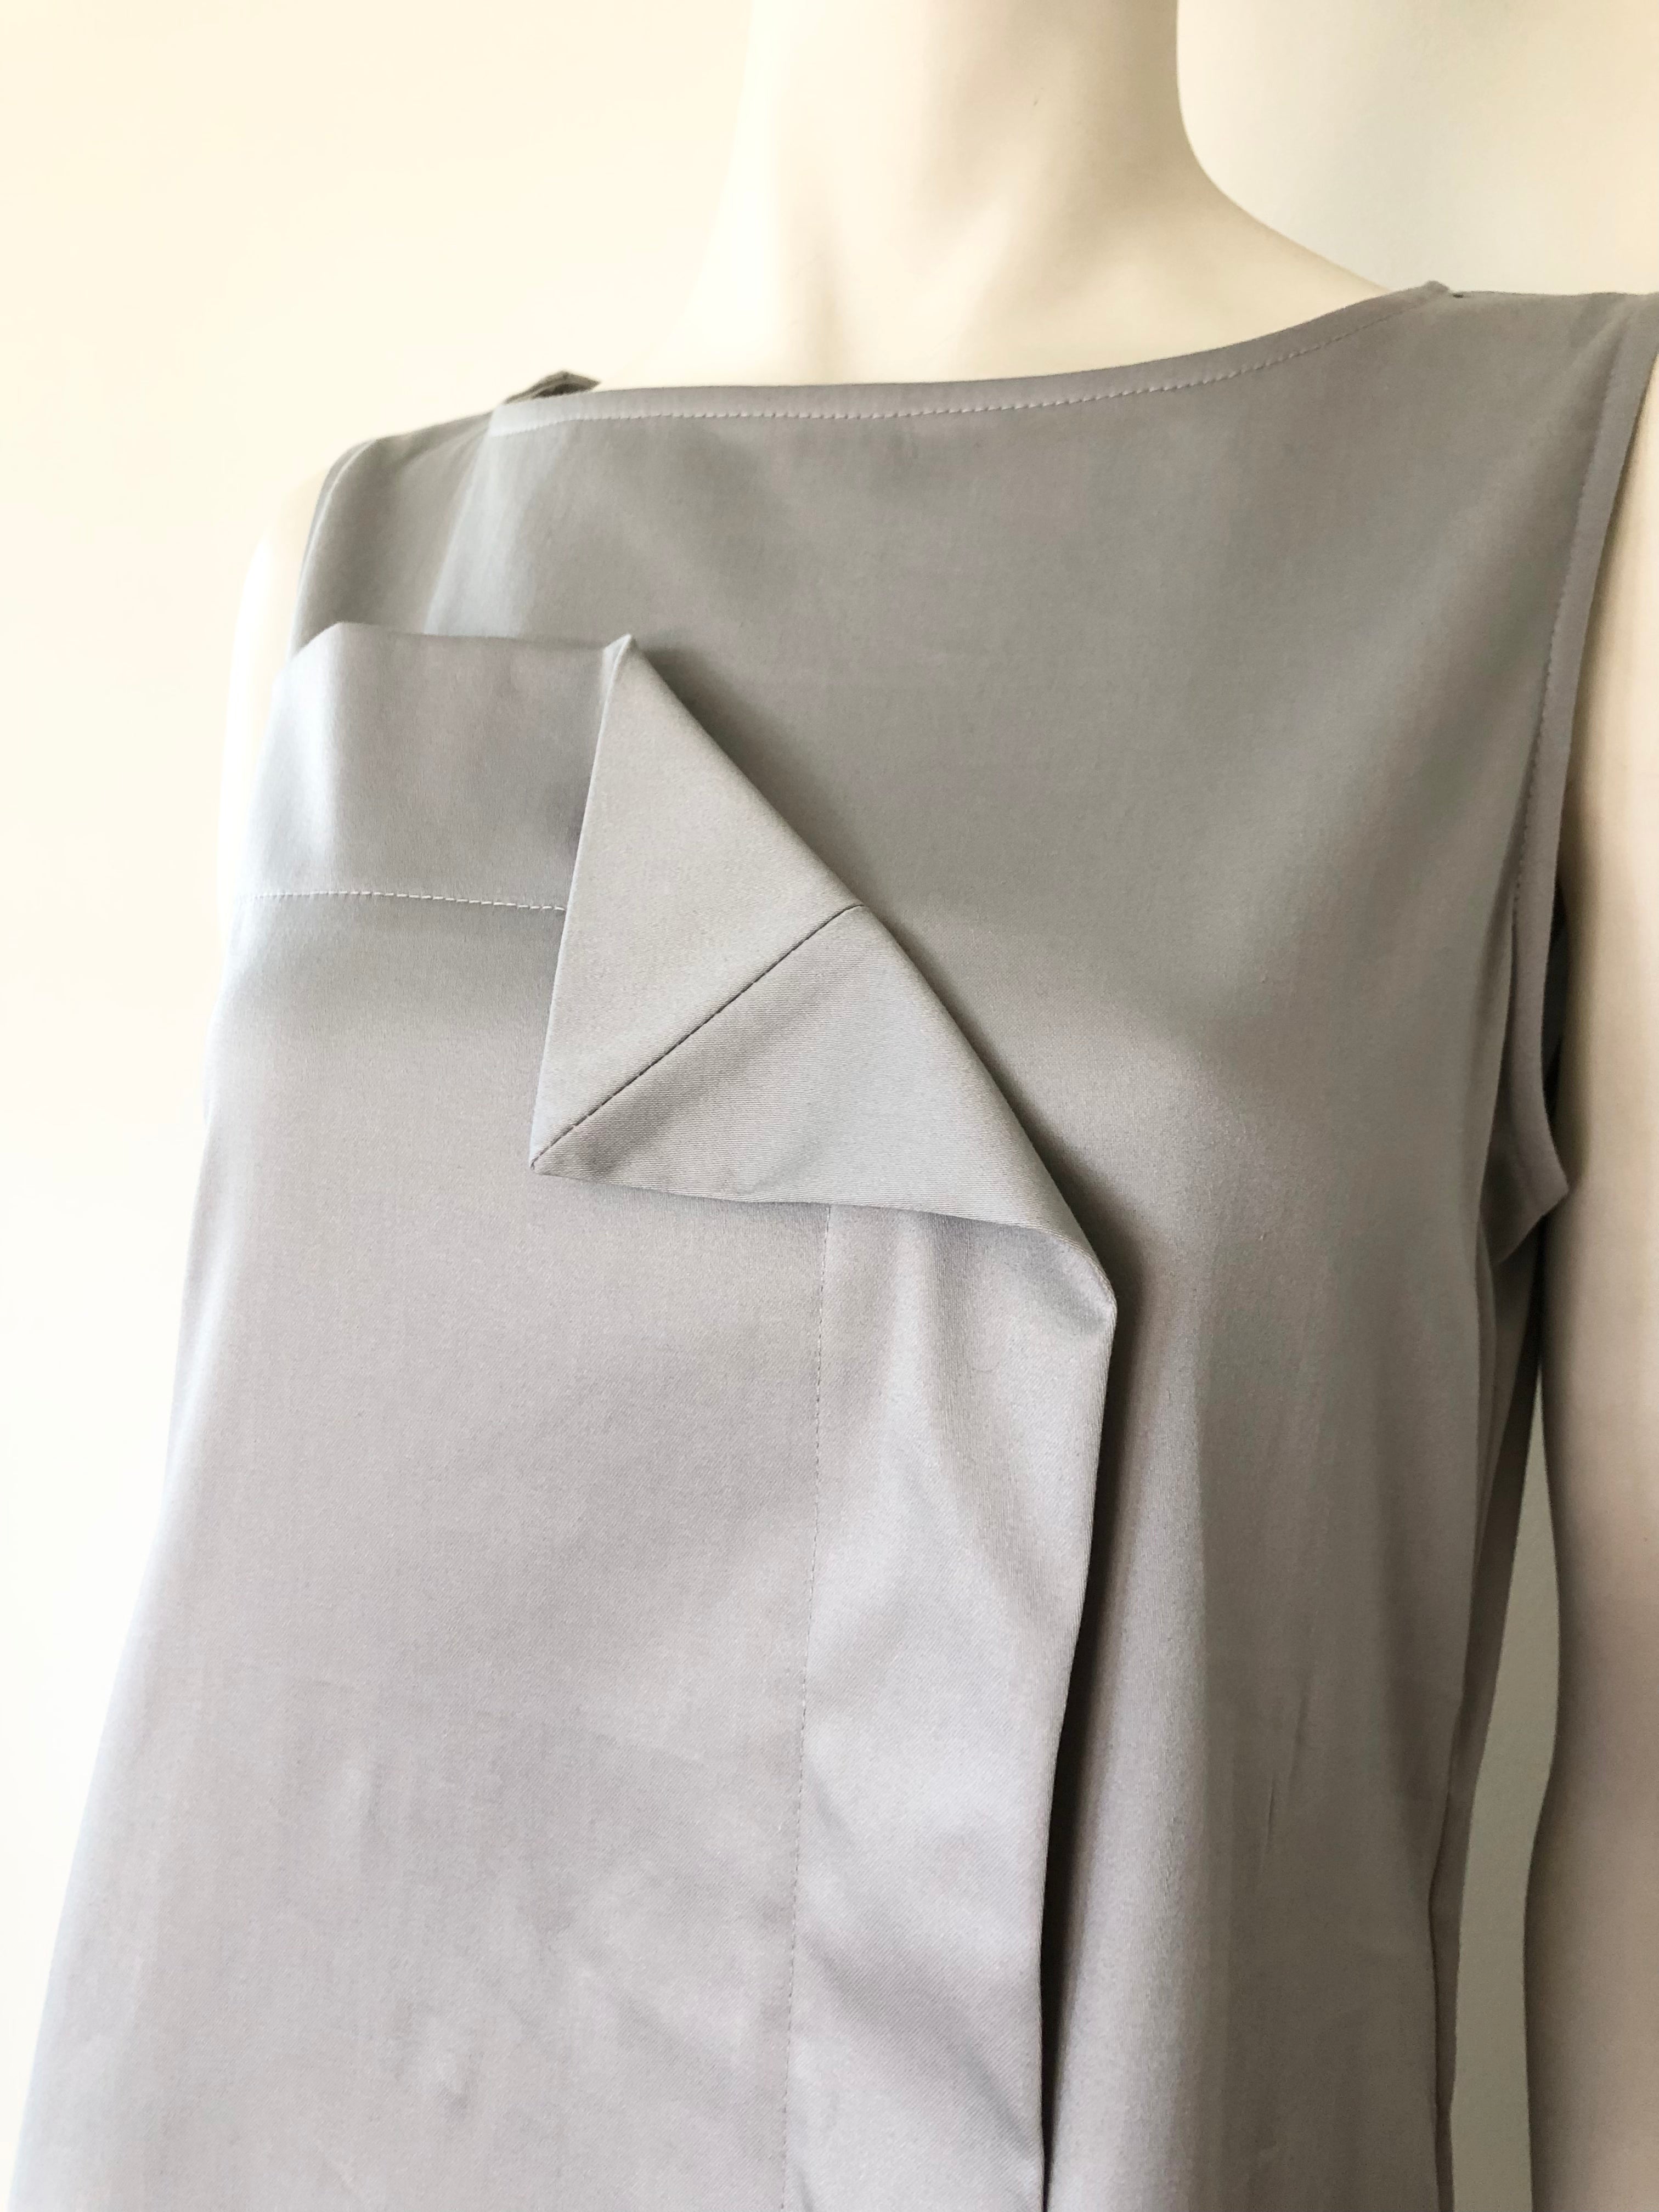 0 / 833  Dress light grey cotton